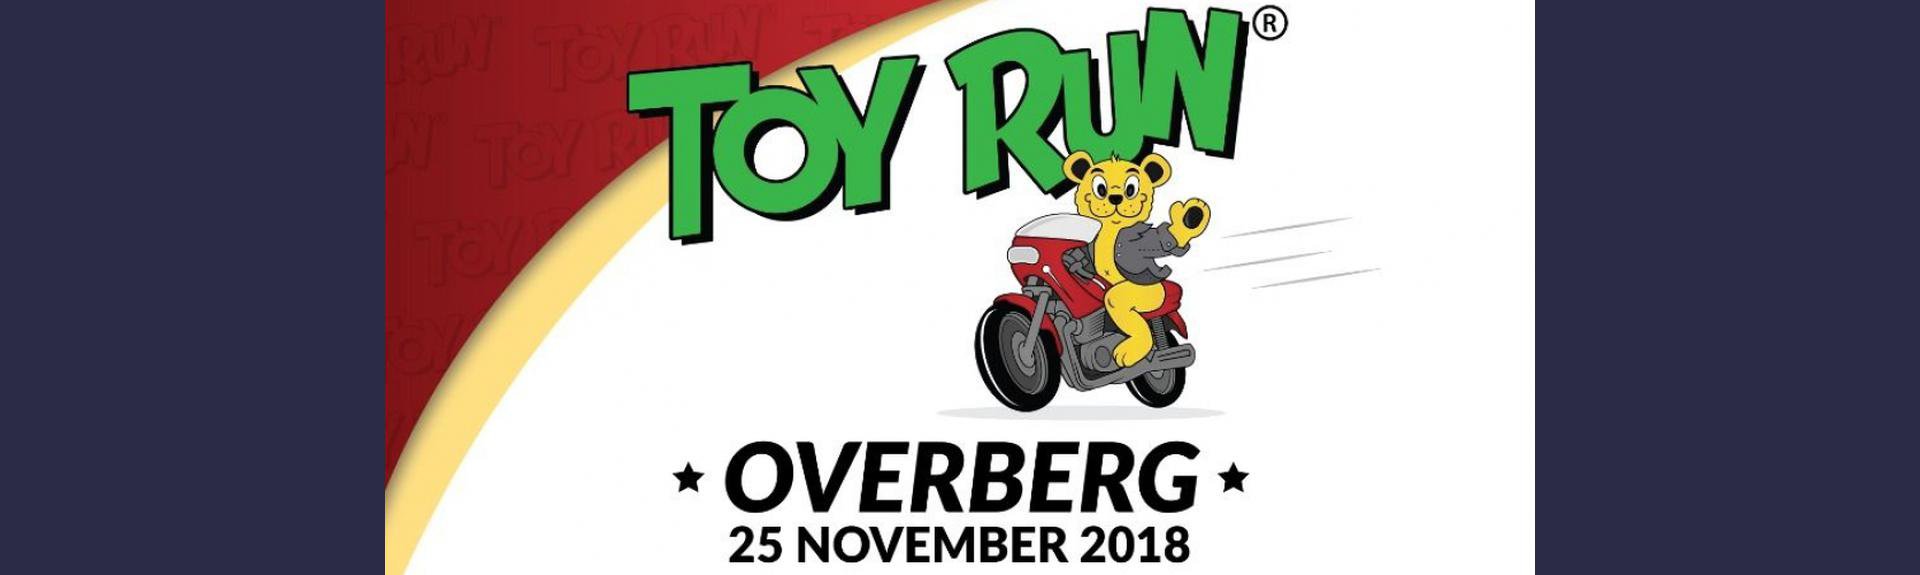 Overberg Toy Run 2018